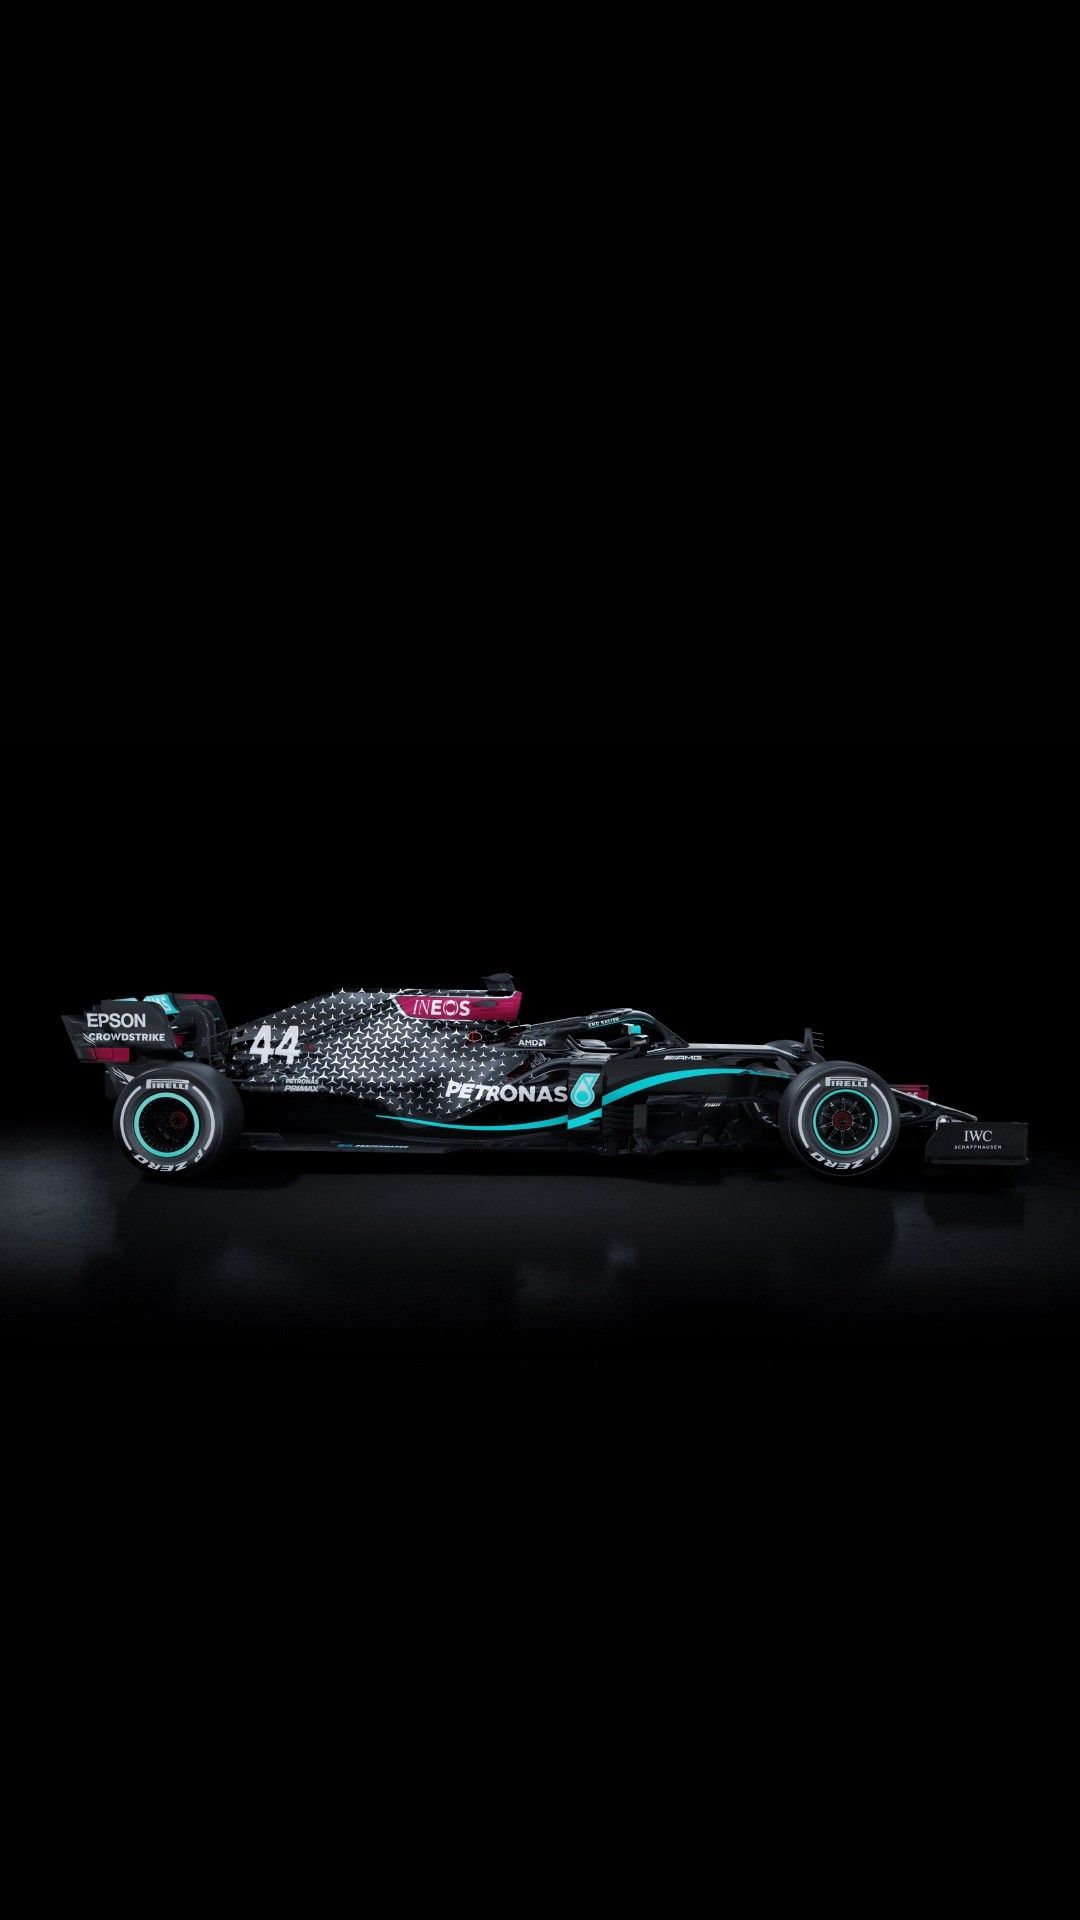 Lewis Hamilton's Car Wallpapers.